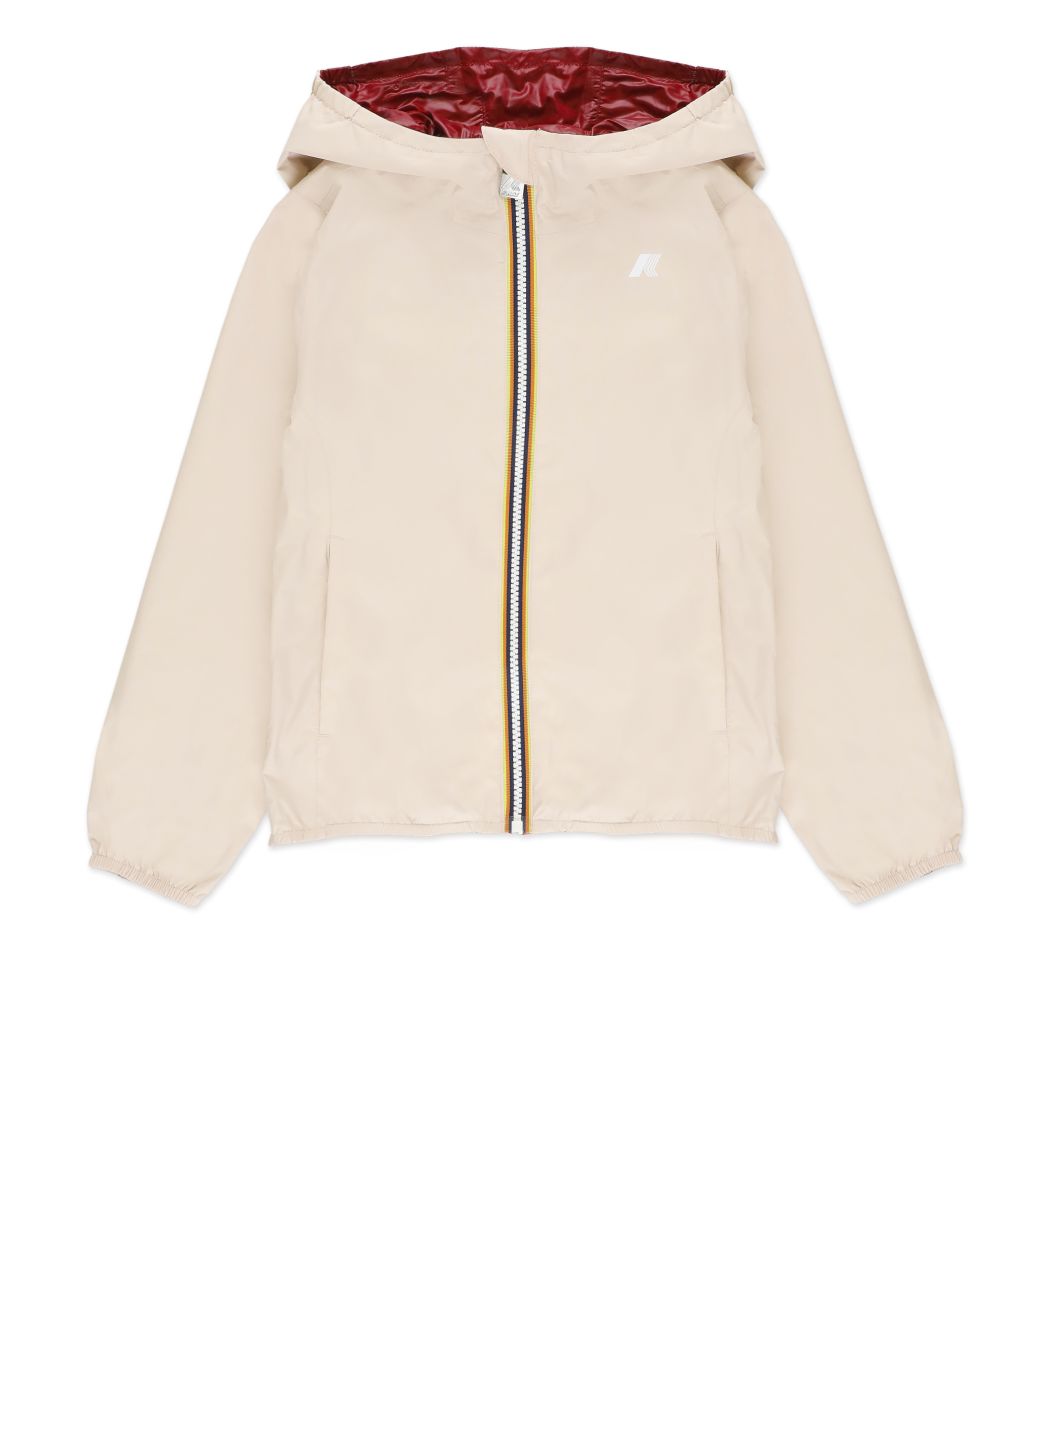 Lily Eco Plus jacket